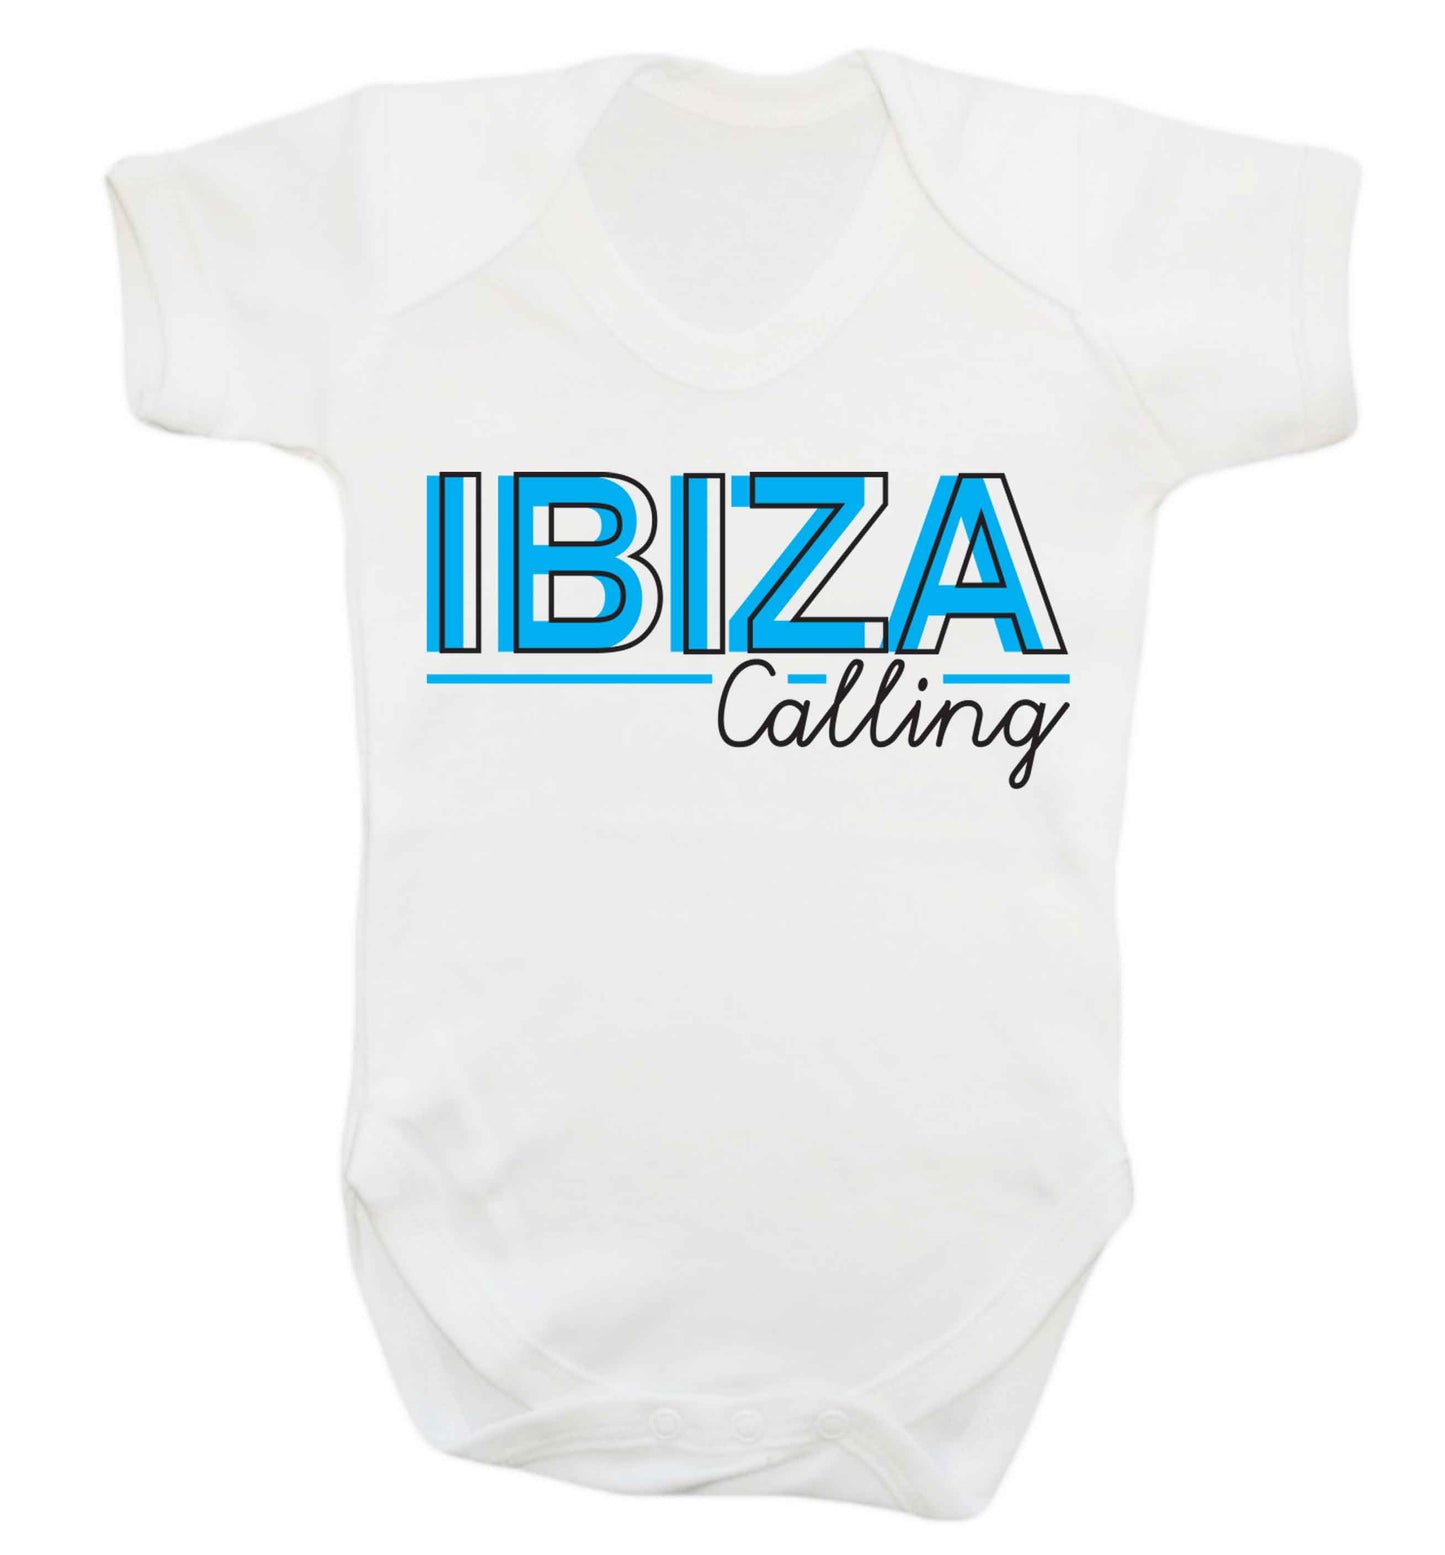 Ibiza calling Baby Vest white 18-24 months